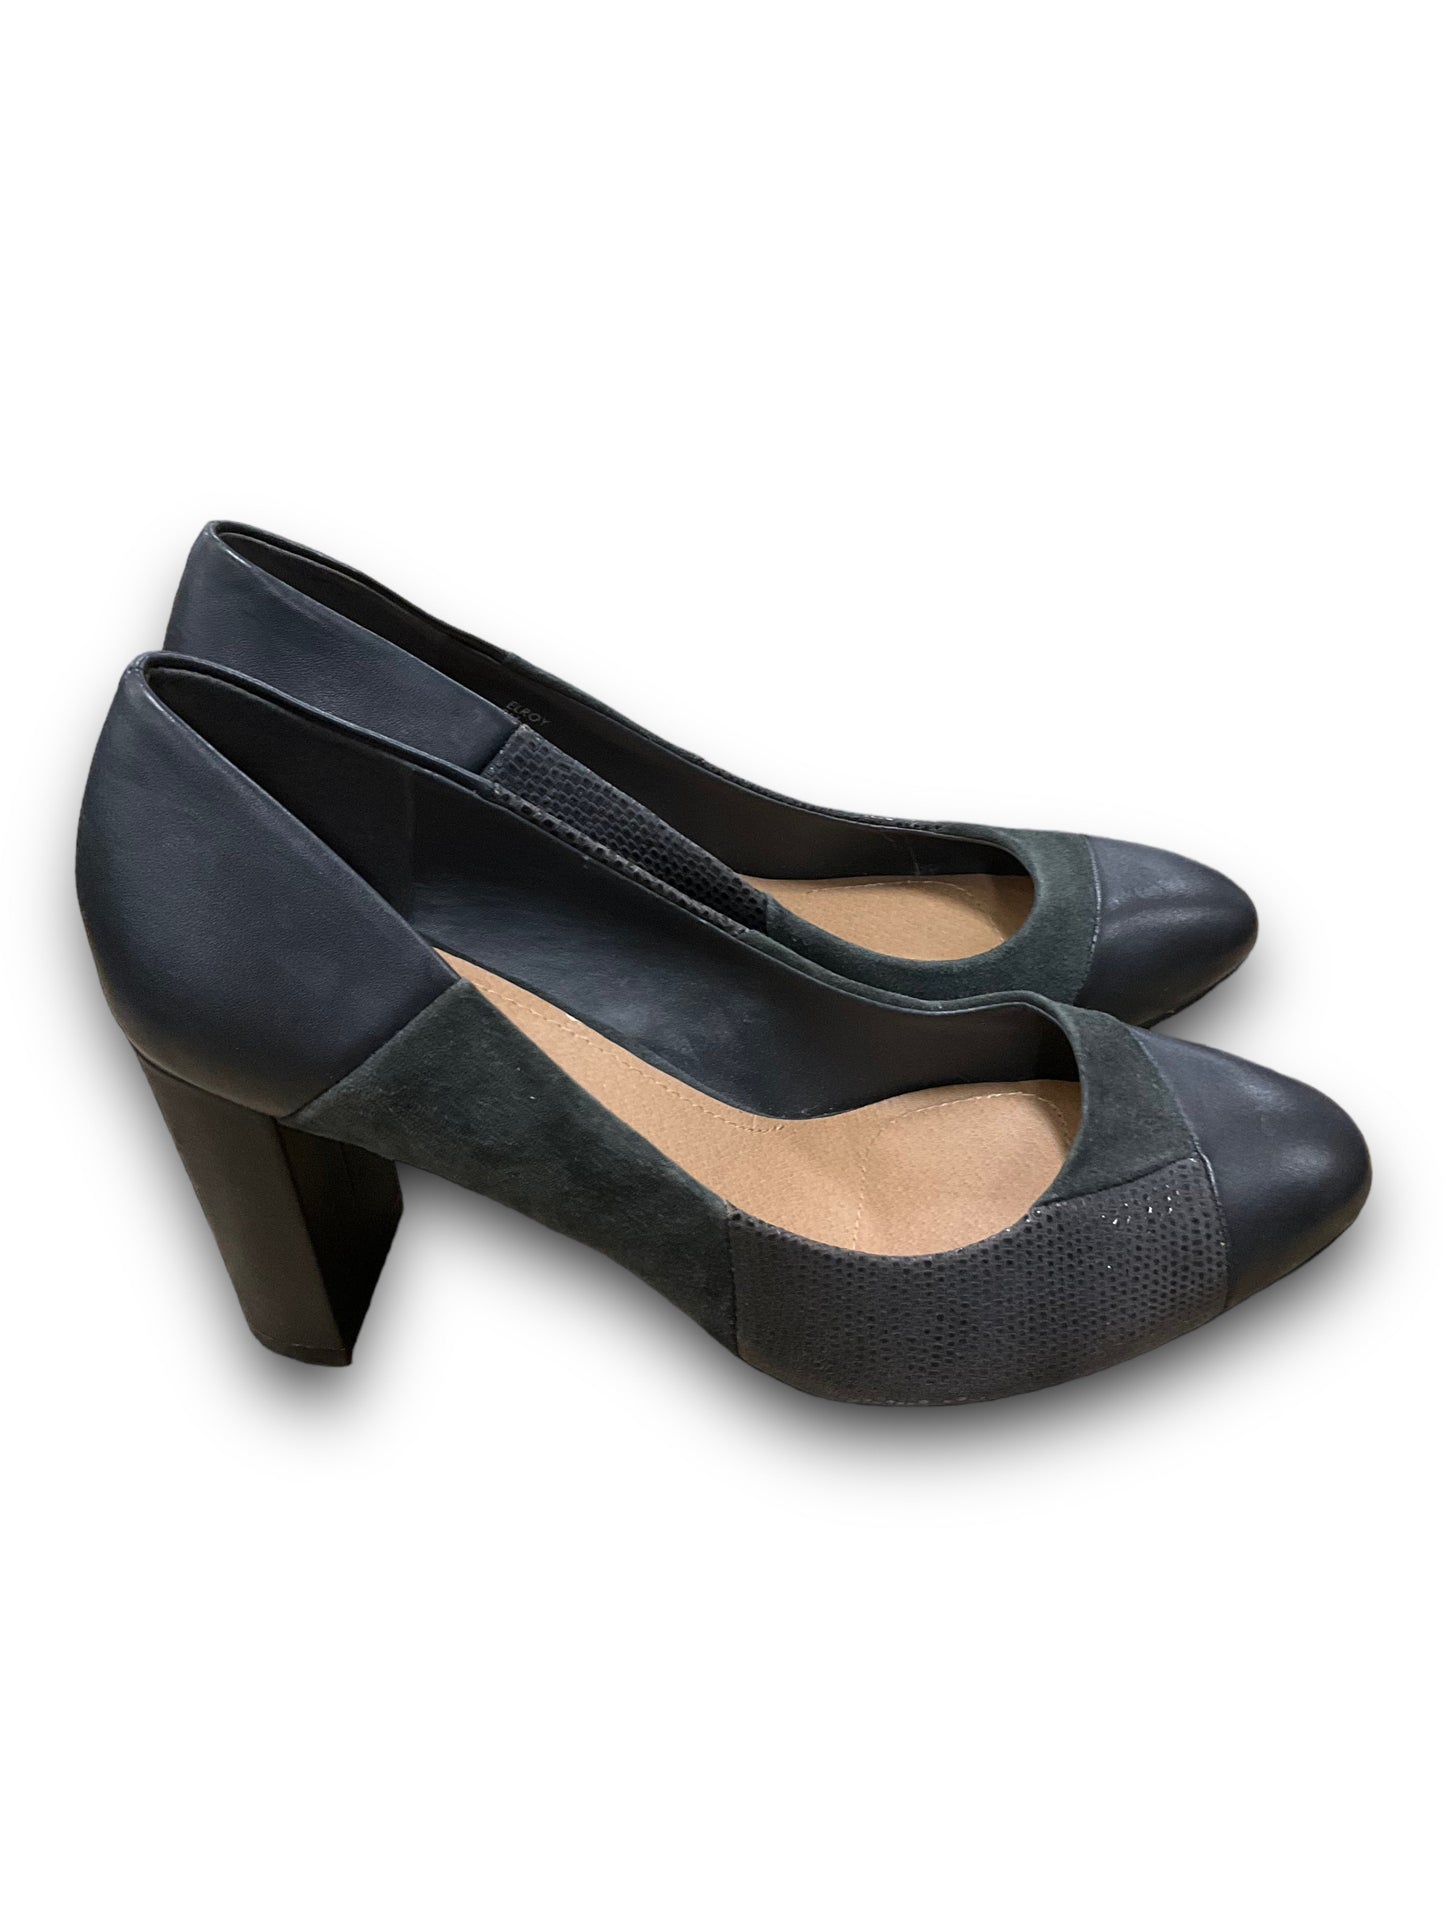 Shoes Heels Block By Tahari  Size: 8